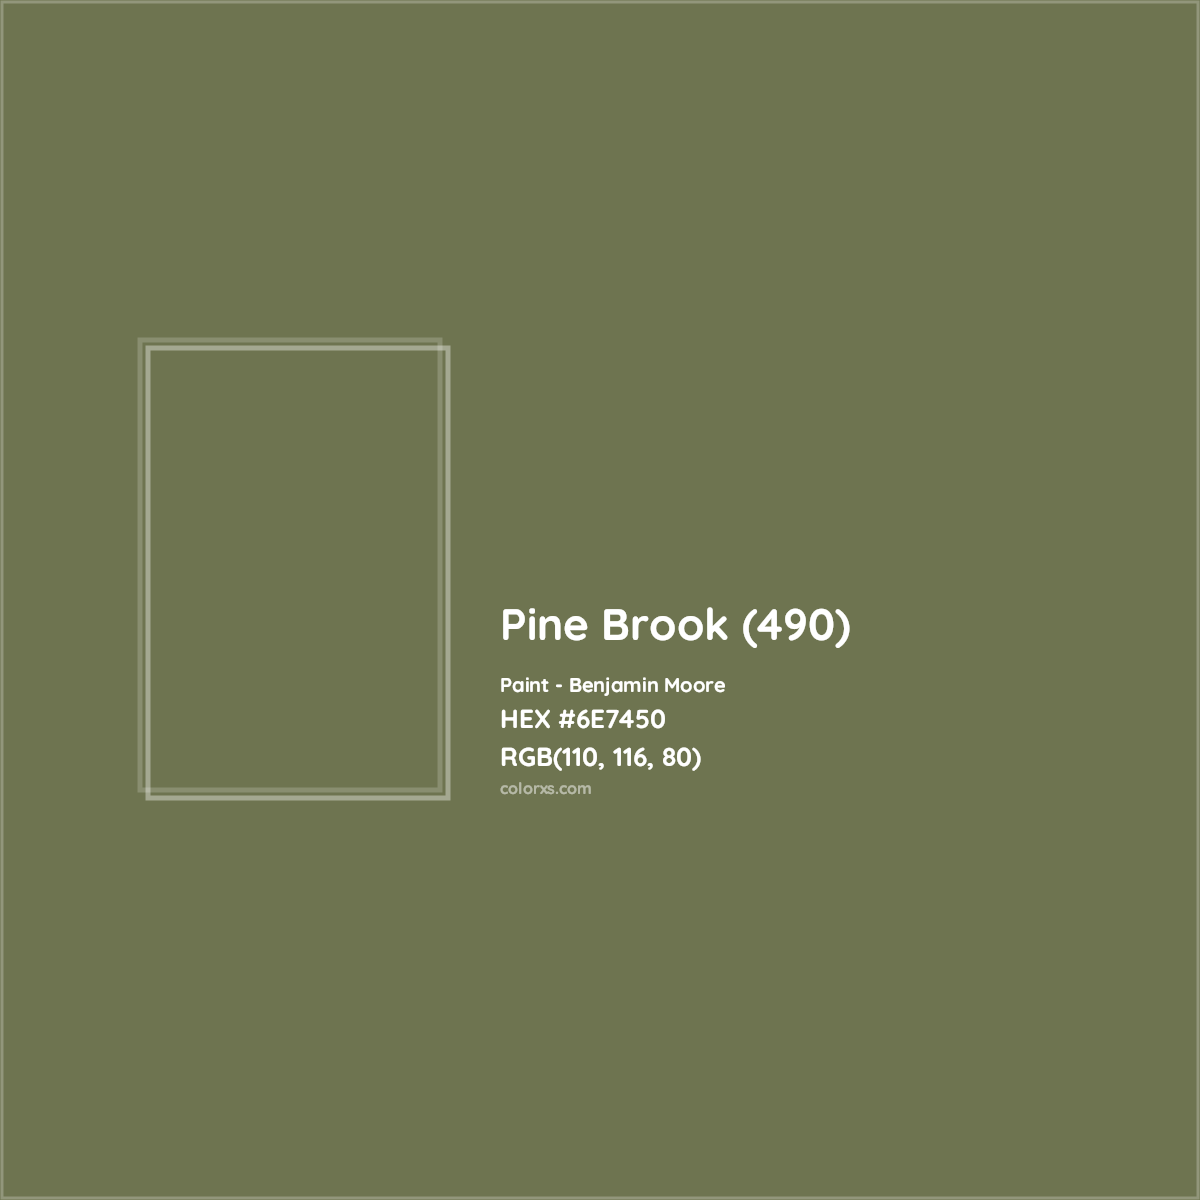 HEX #6E7450 Pine Brook (490) Paint Benjamin Moore - Color Code